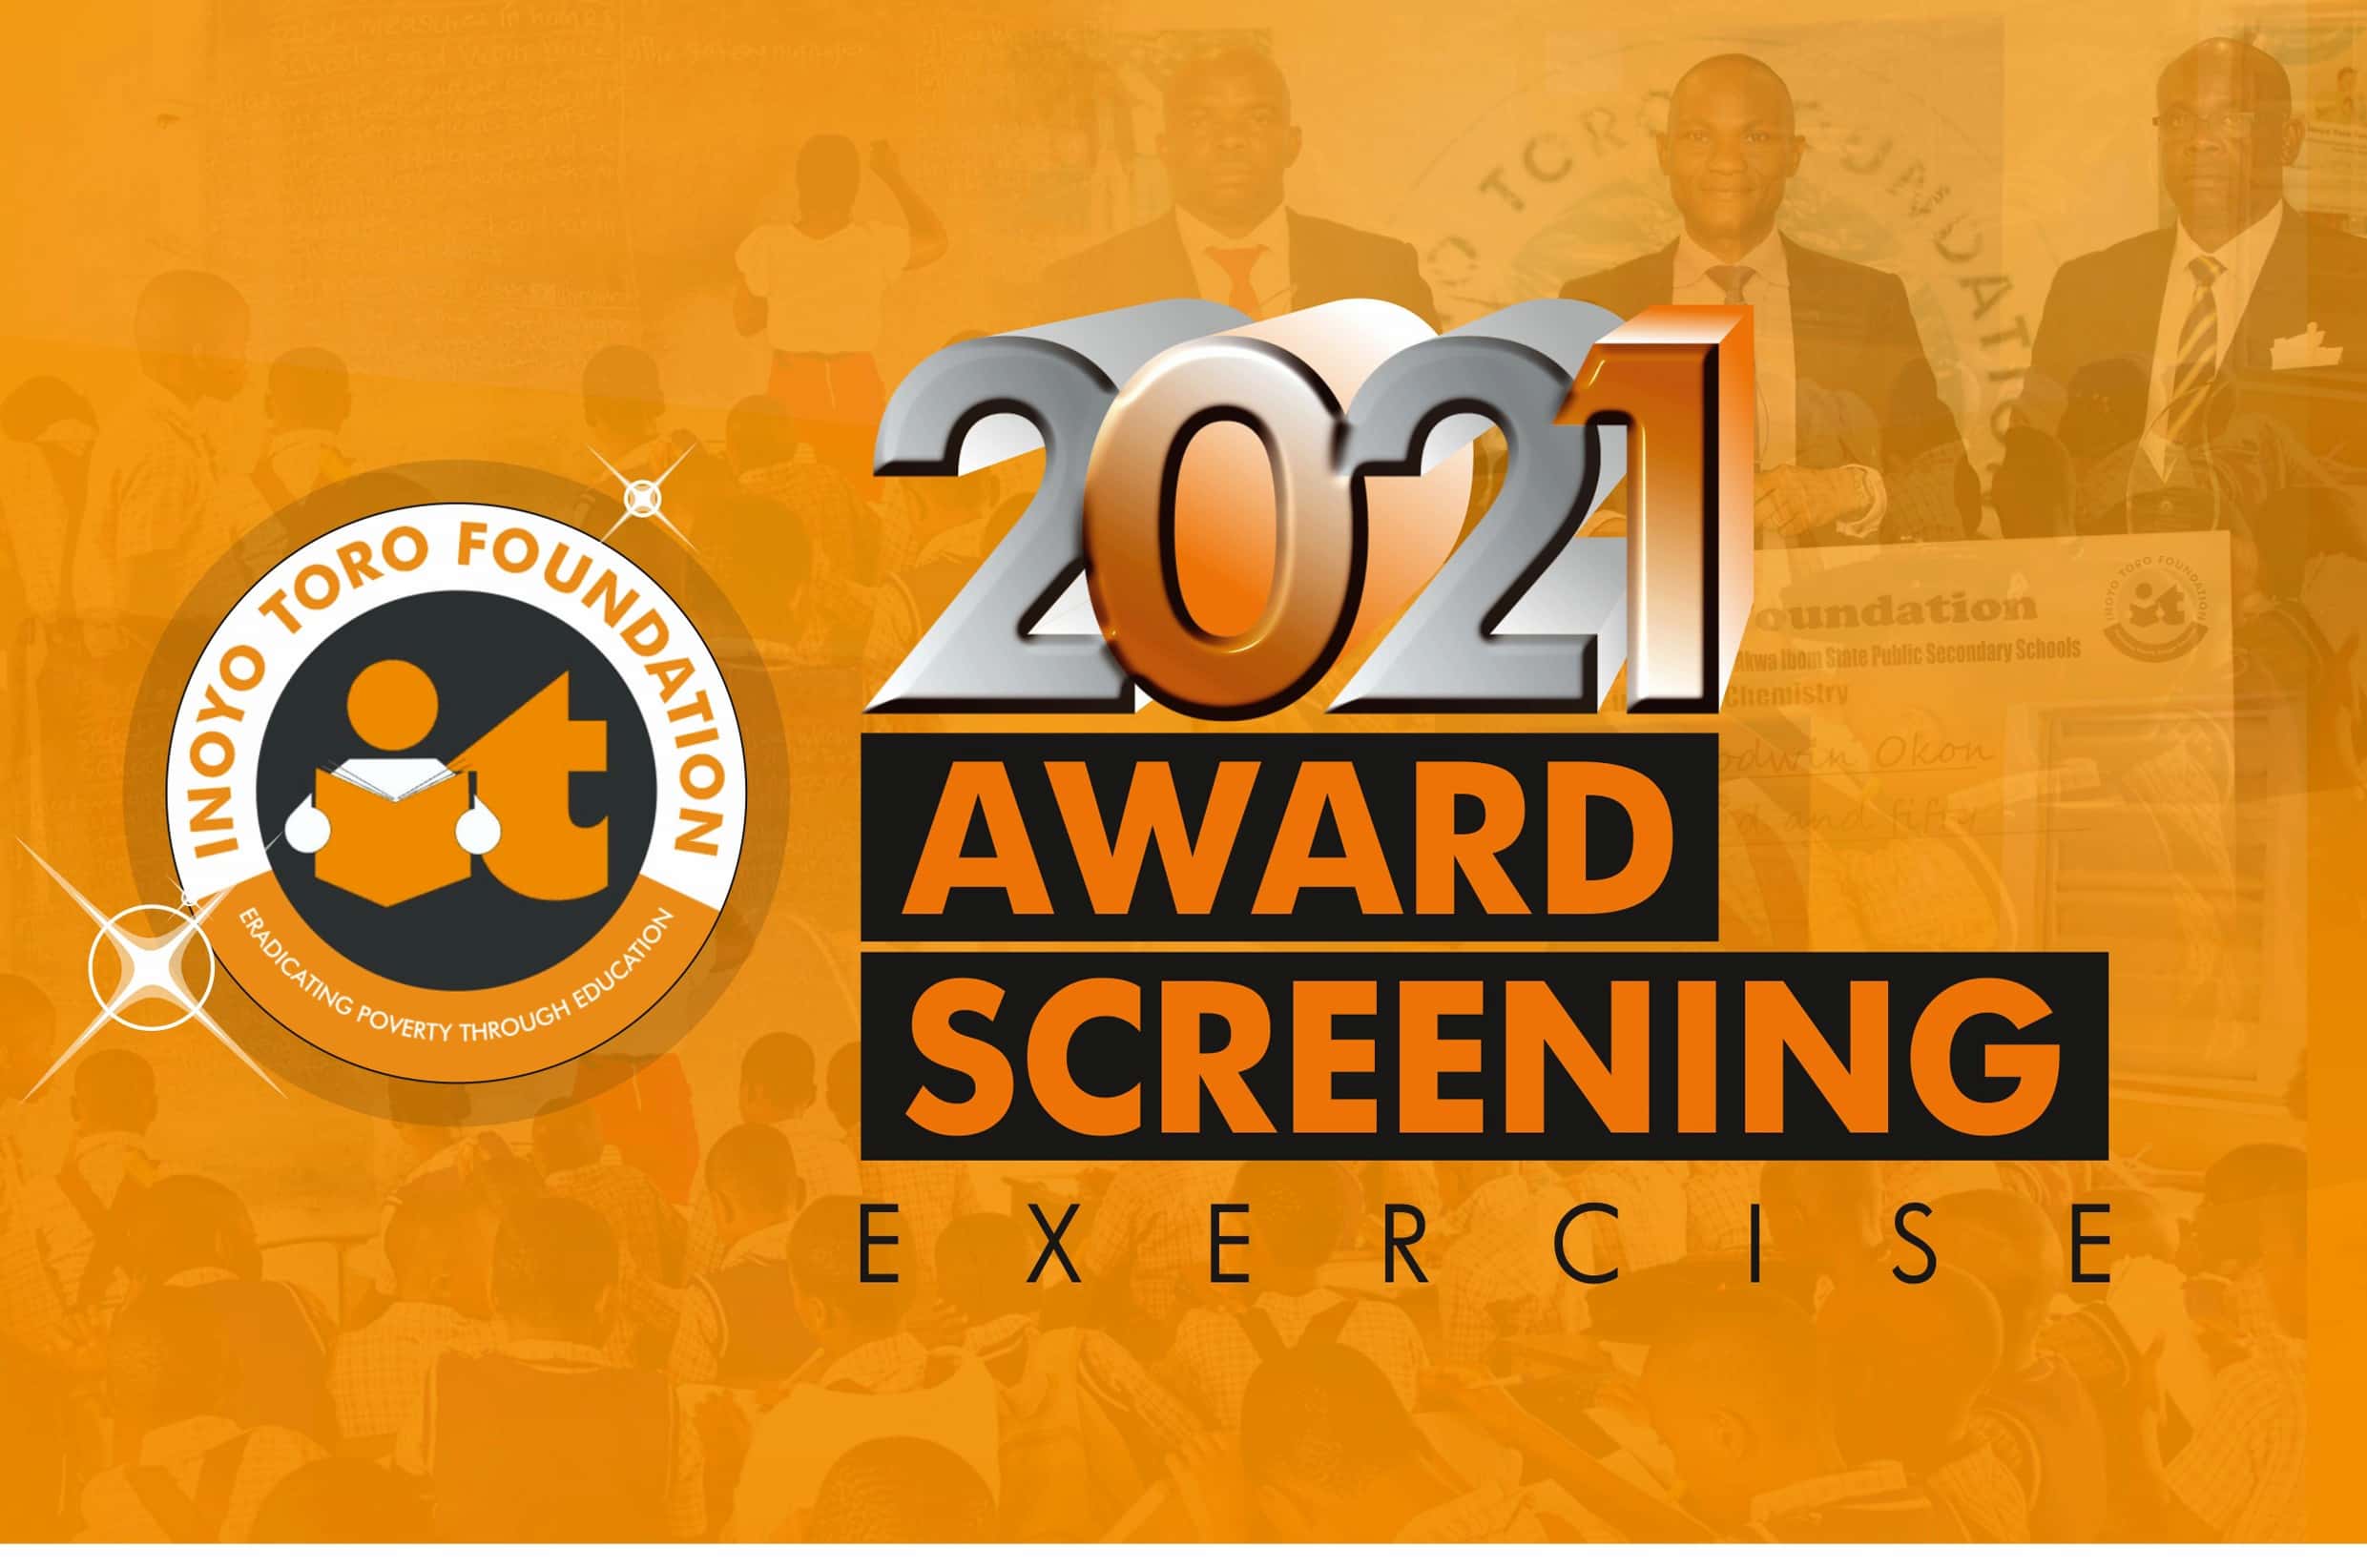 2021 Award Screening